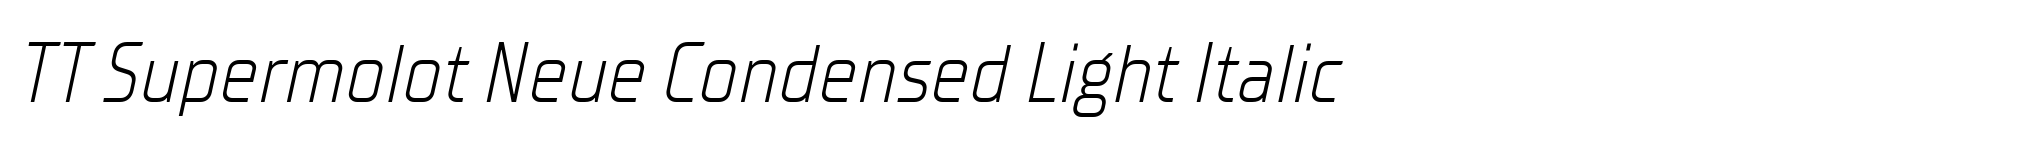 TT Supermolot Neue Condensed Light Italic image